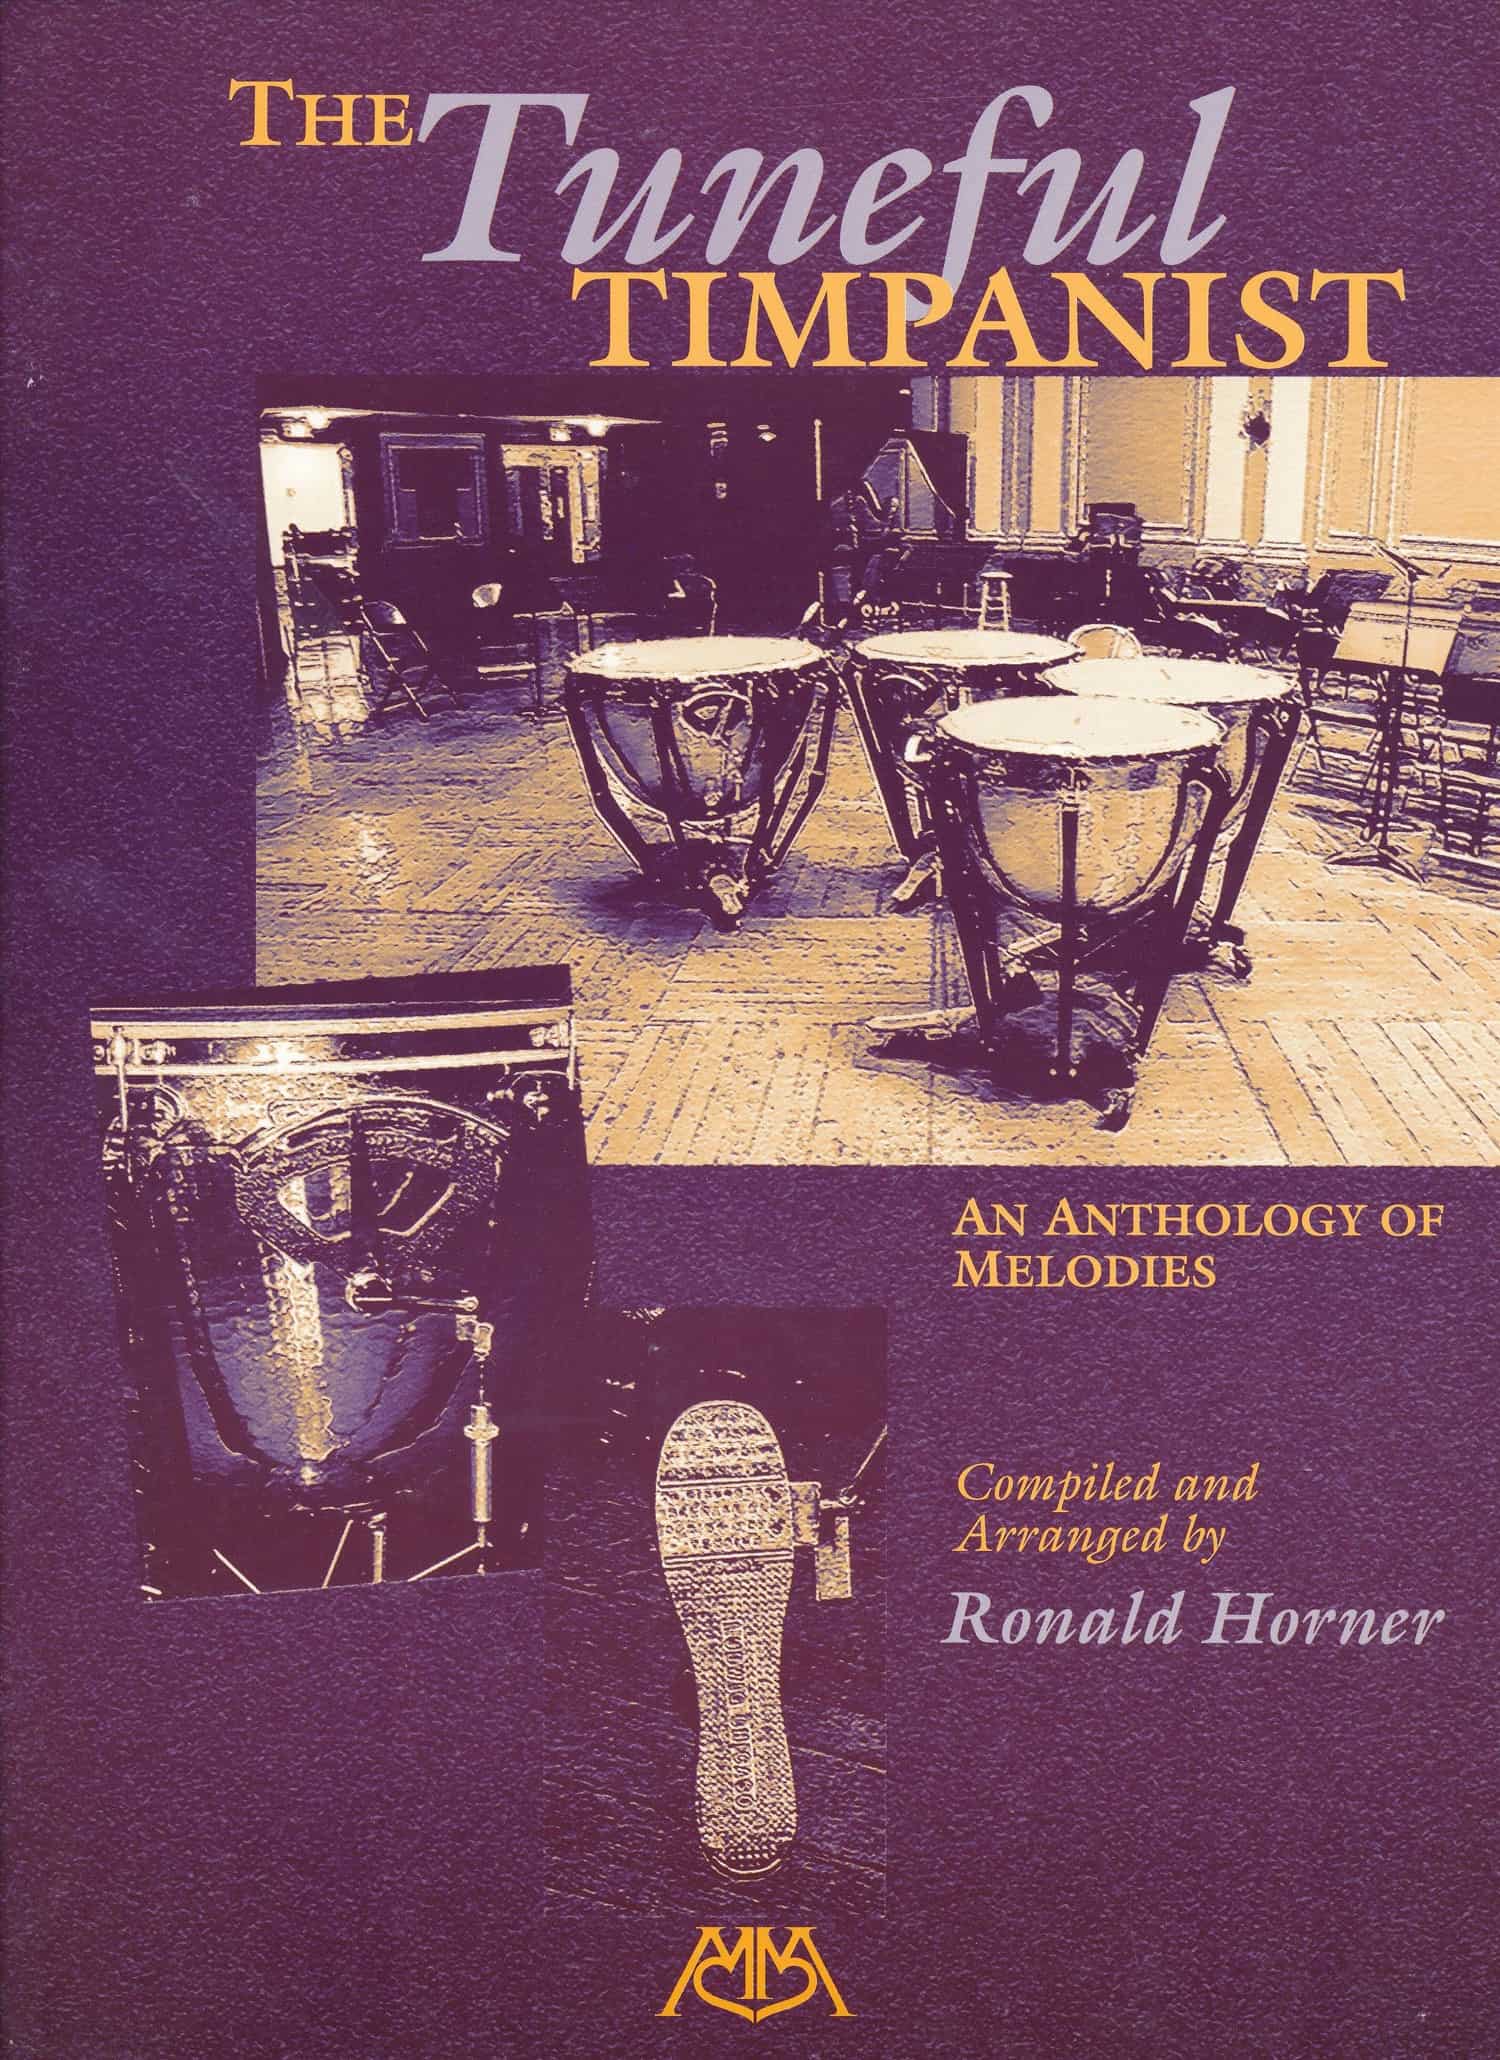 The Tuneful Timpanist